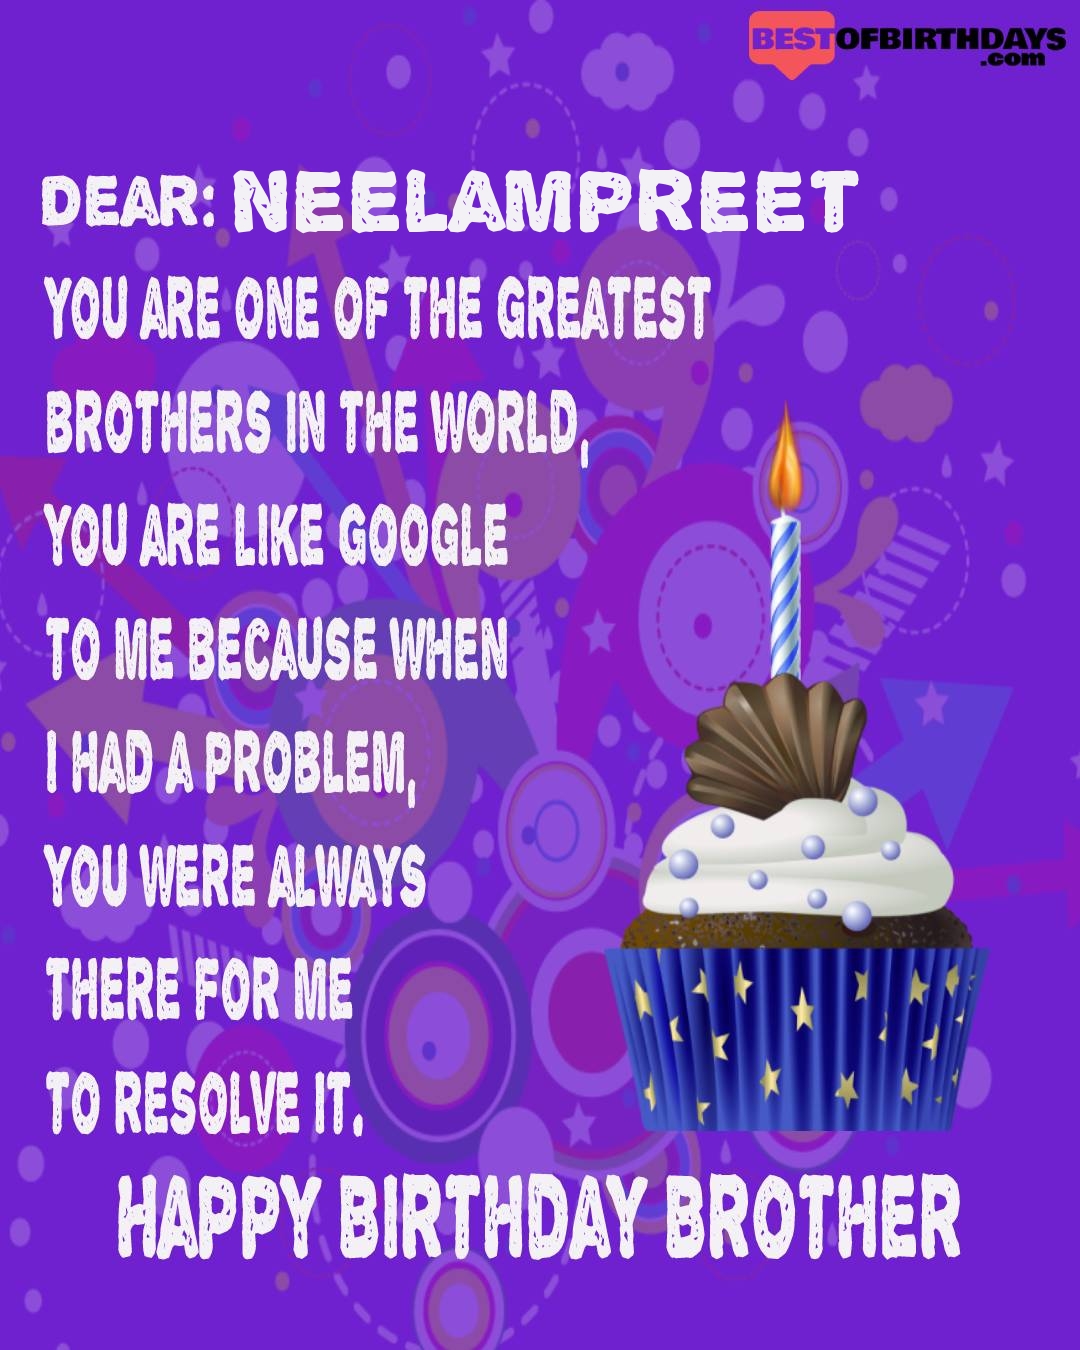 Happy birthday neelampreet bhai brother bro